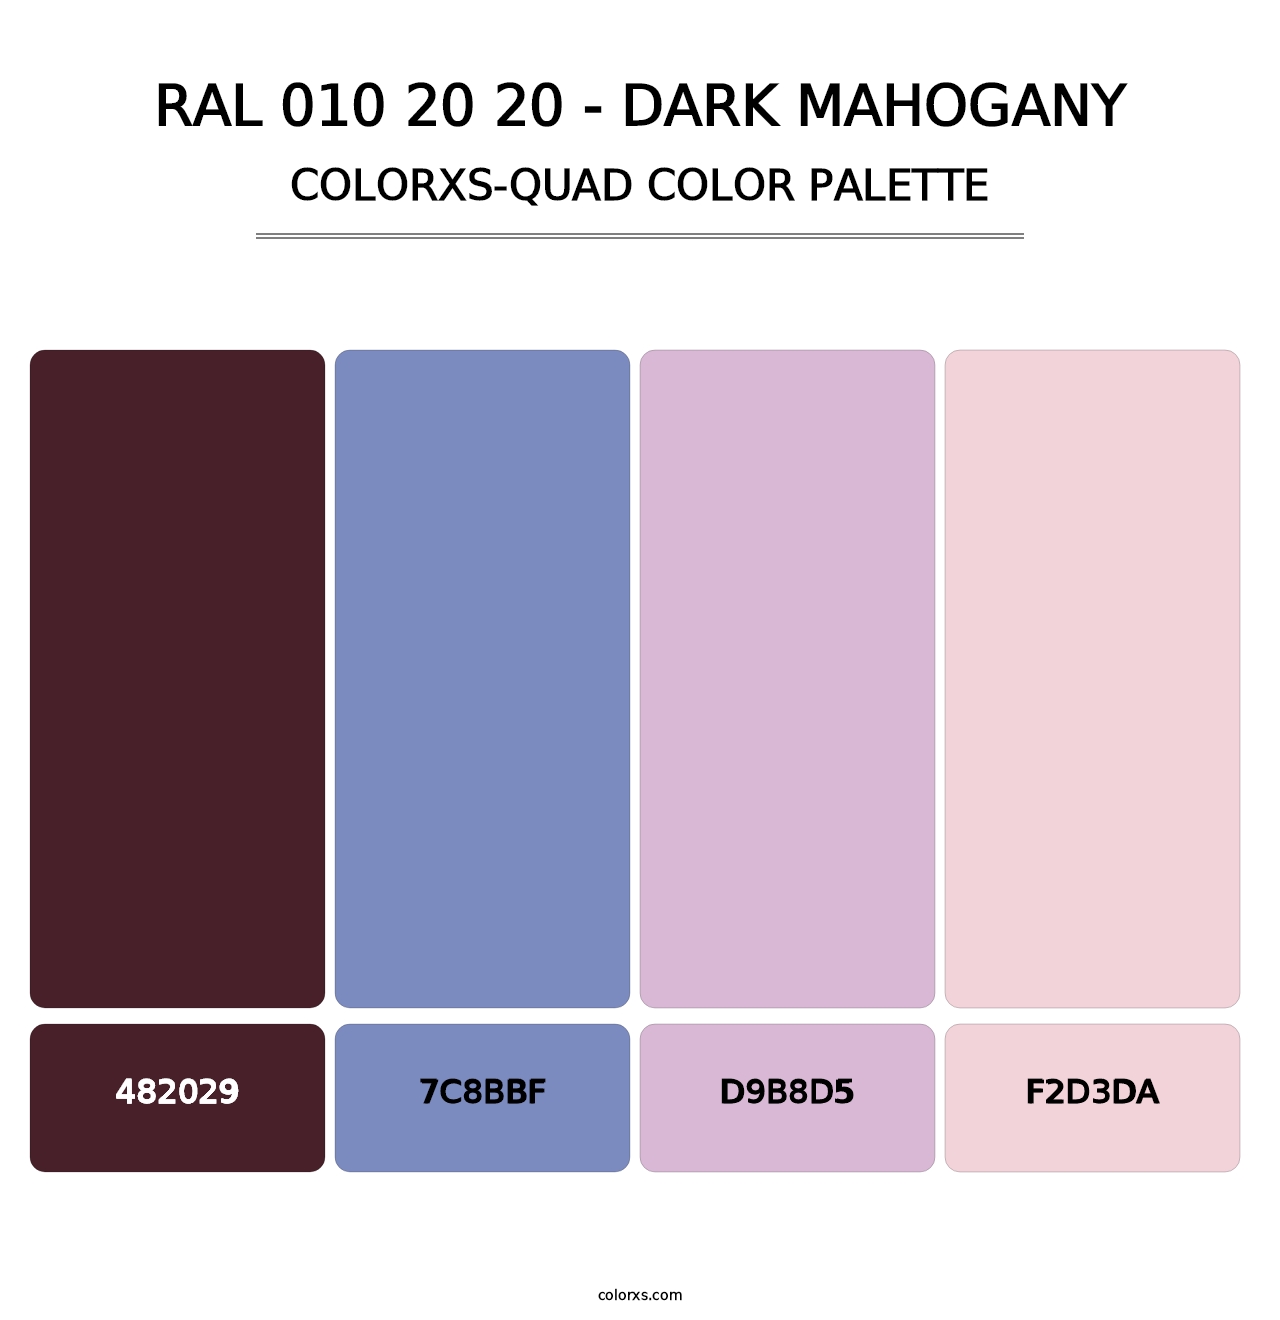 RAL 010 20 20 - Dark Mahogany - Colorxs Quad Palette